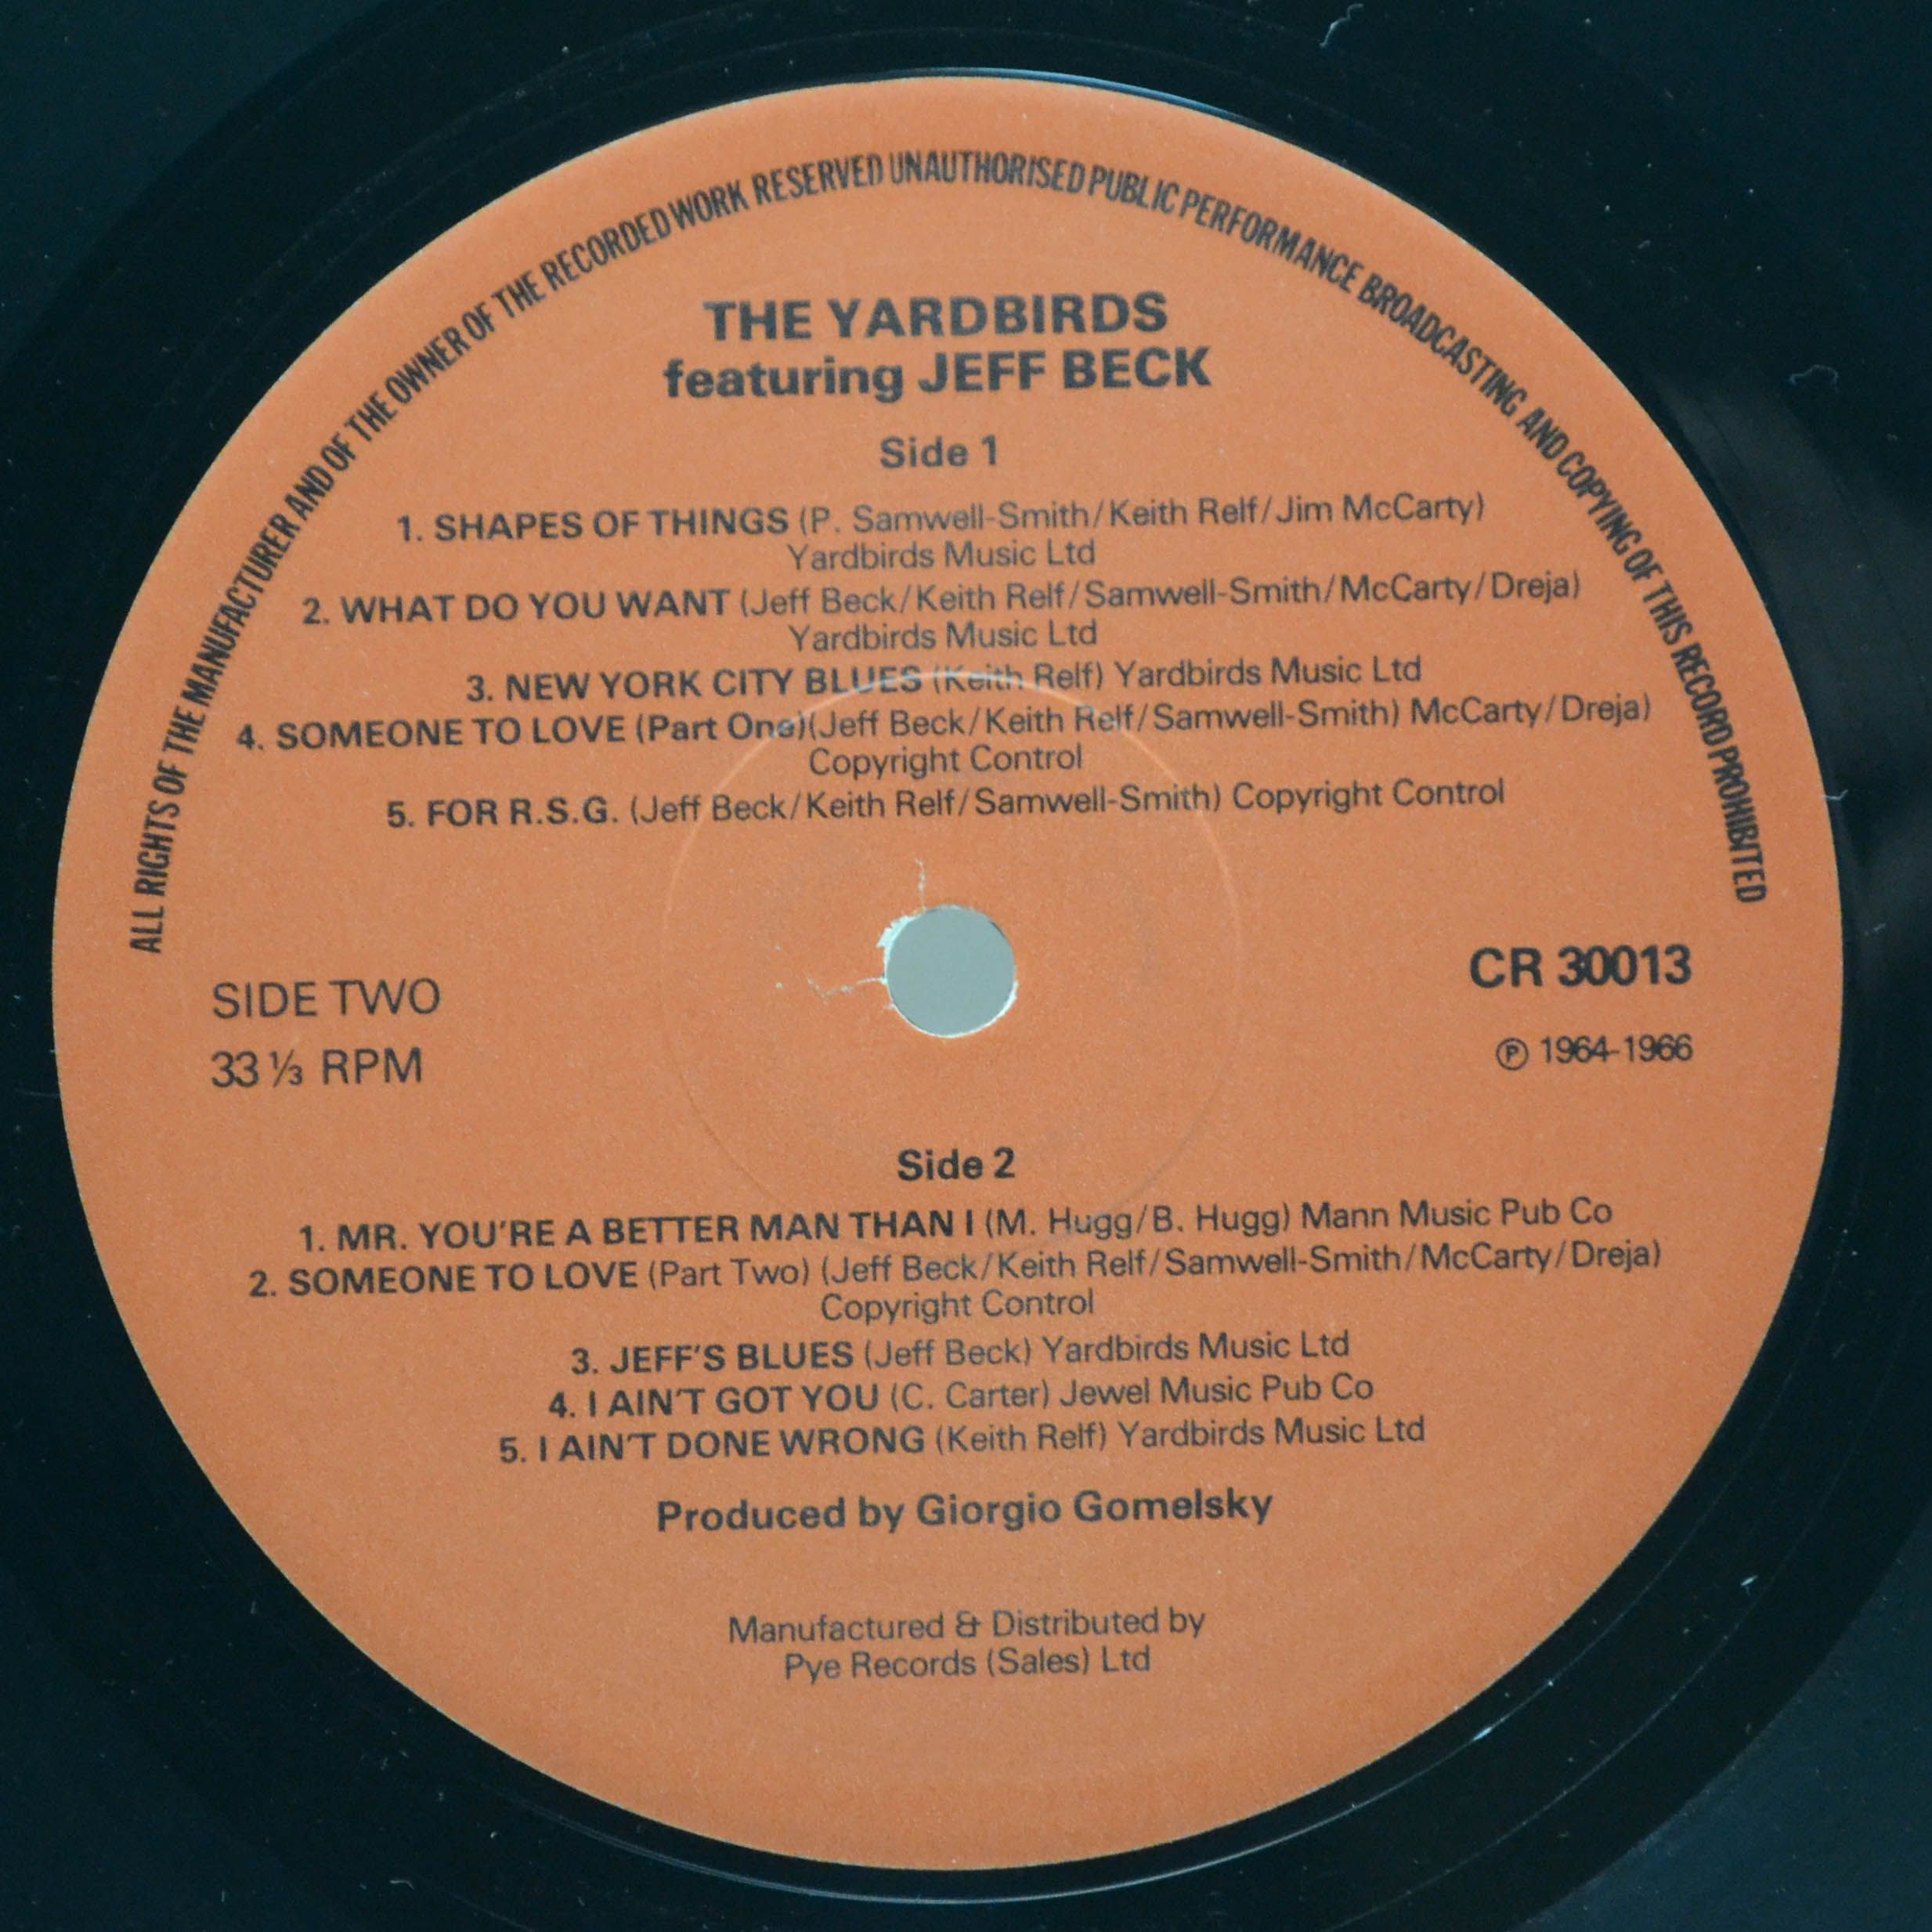 Yardbirds Featuring Jeff Beck — The Yardbirds Featuring Jeff Beck (UK), 1977